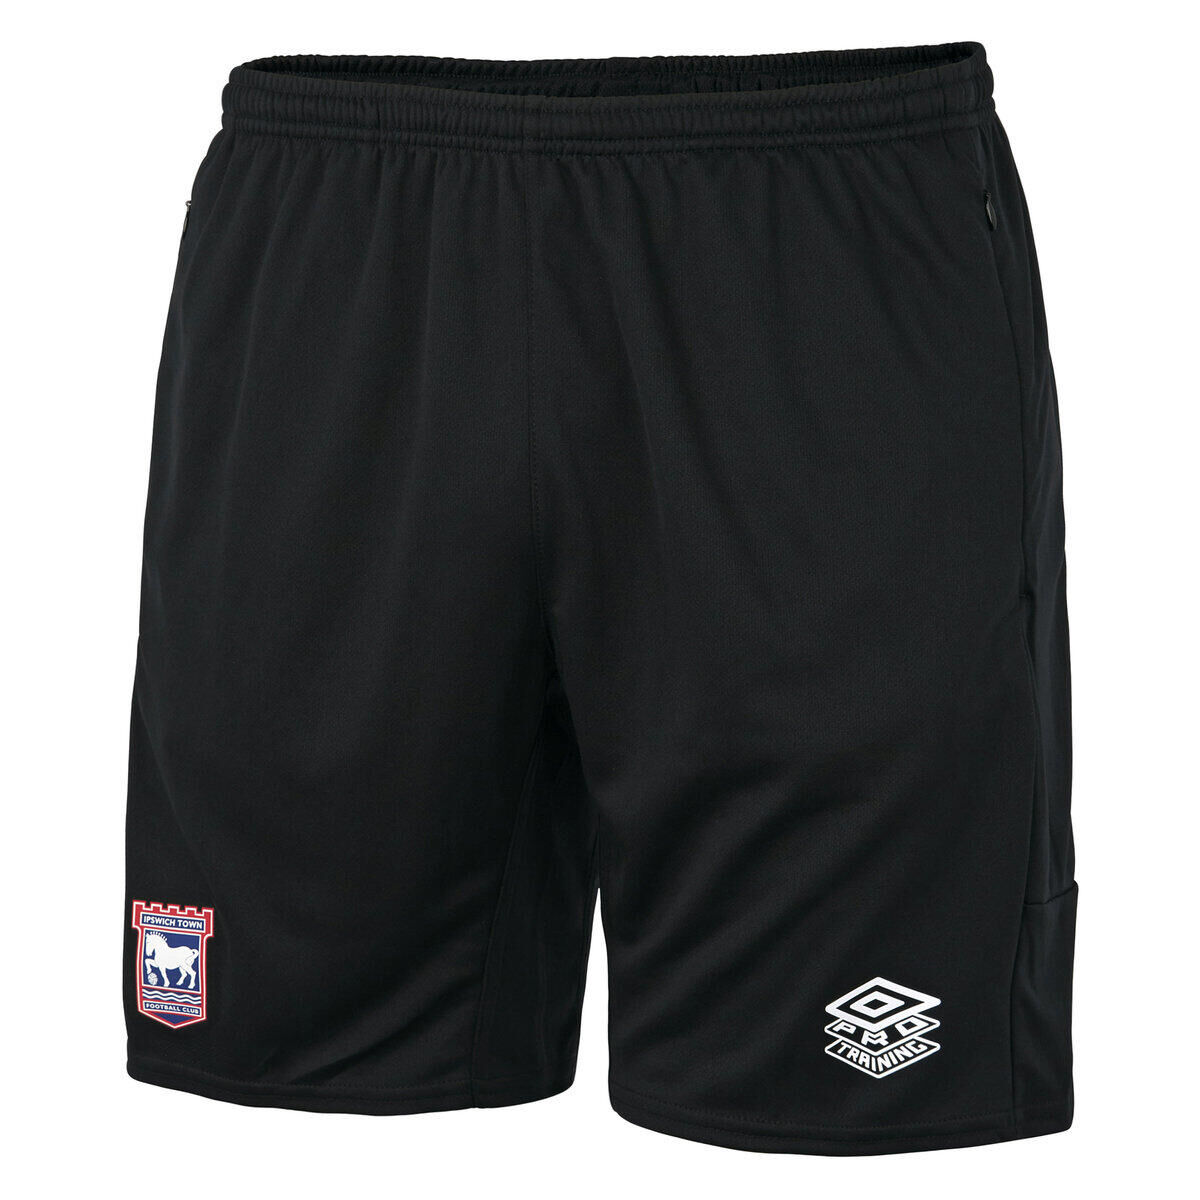 UMBRO Ipswich Town FC Mens 22/23 Training Shorts (Black)